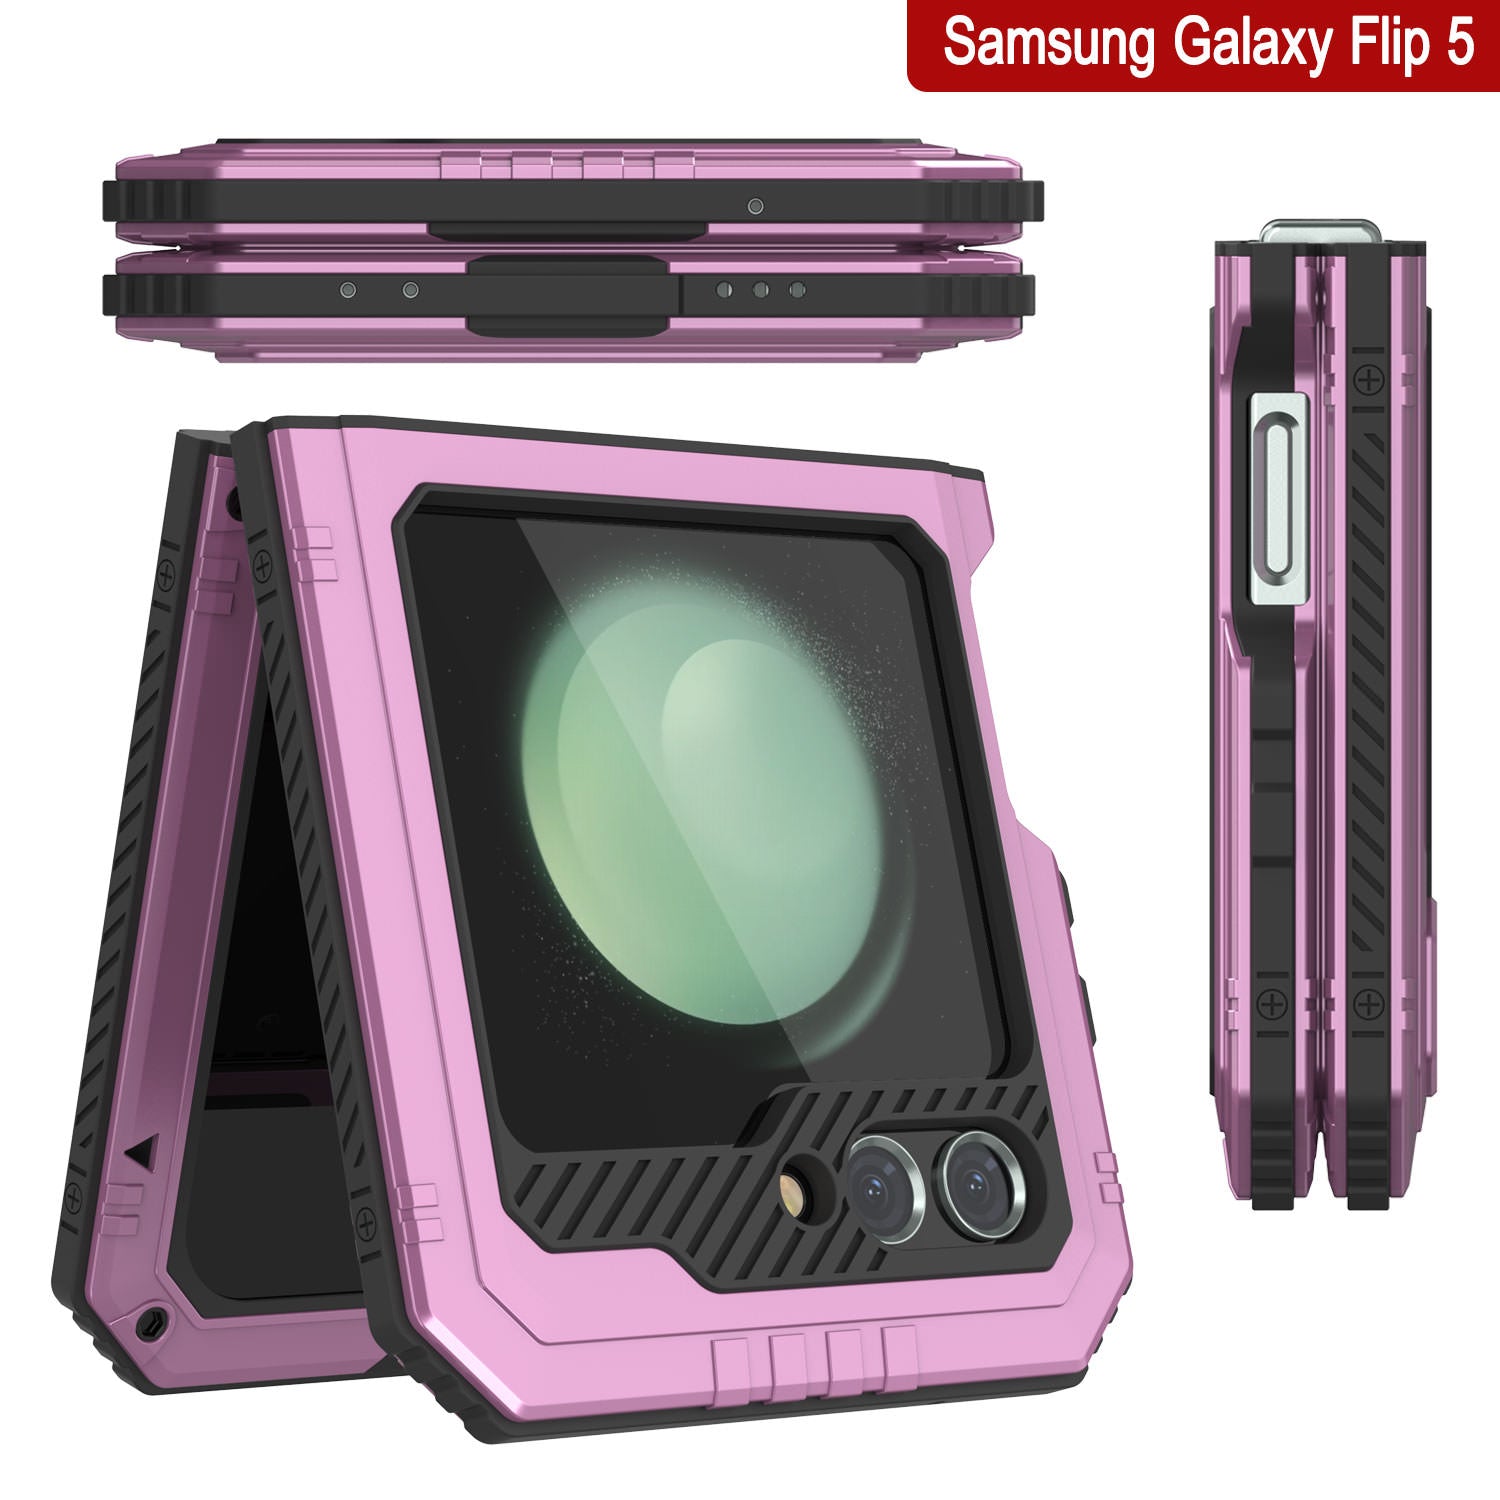 Galaxy Z Flip5 Metal Case, Heavy Duty Military Grade Armor Cover Full Body Hard [Pink]